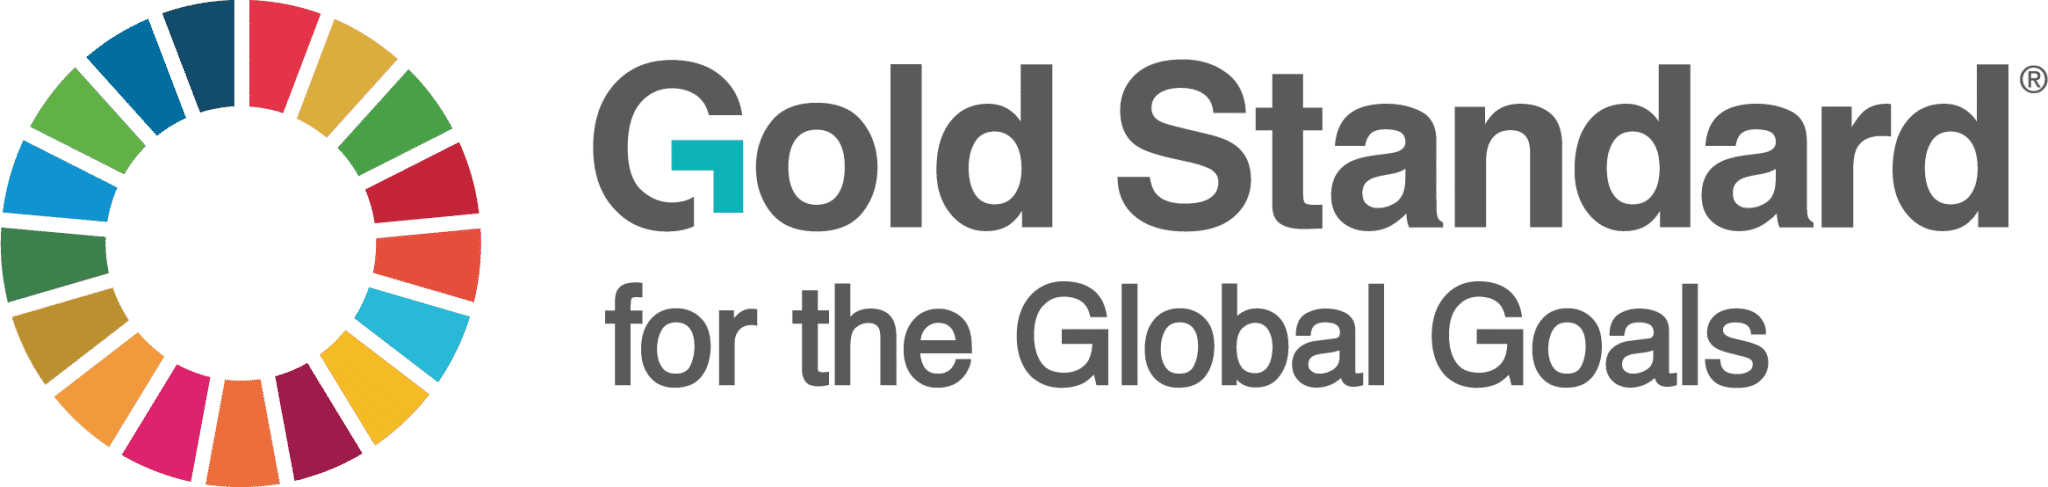 gold standard certifiering logo